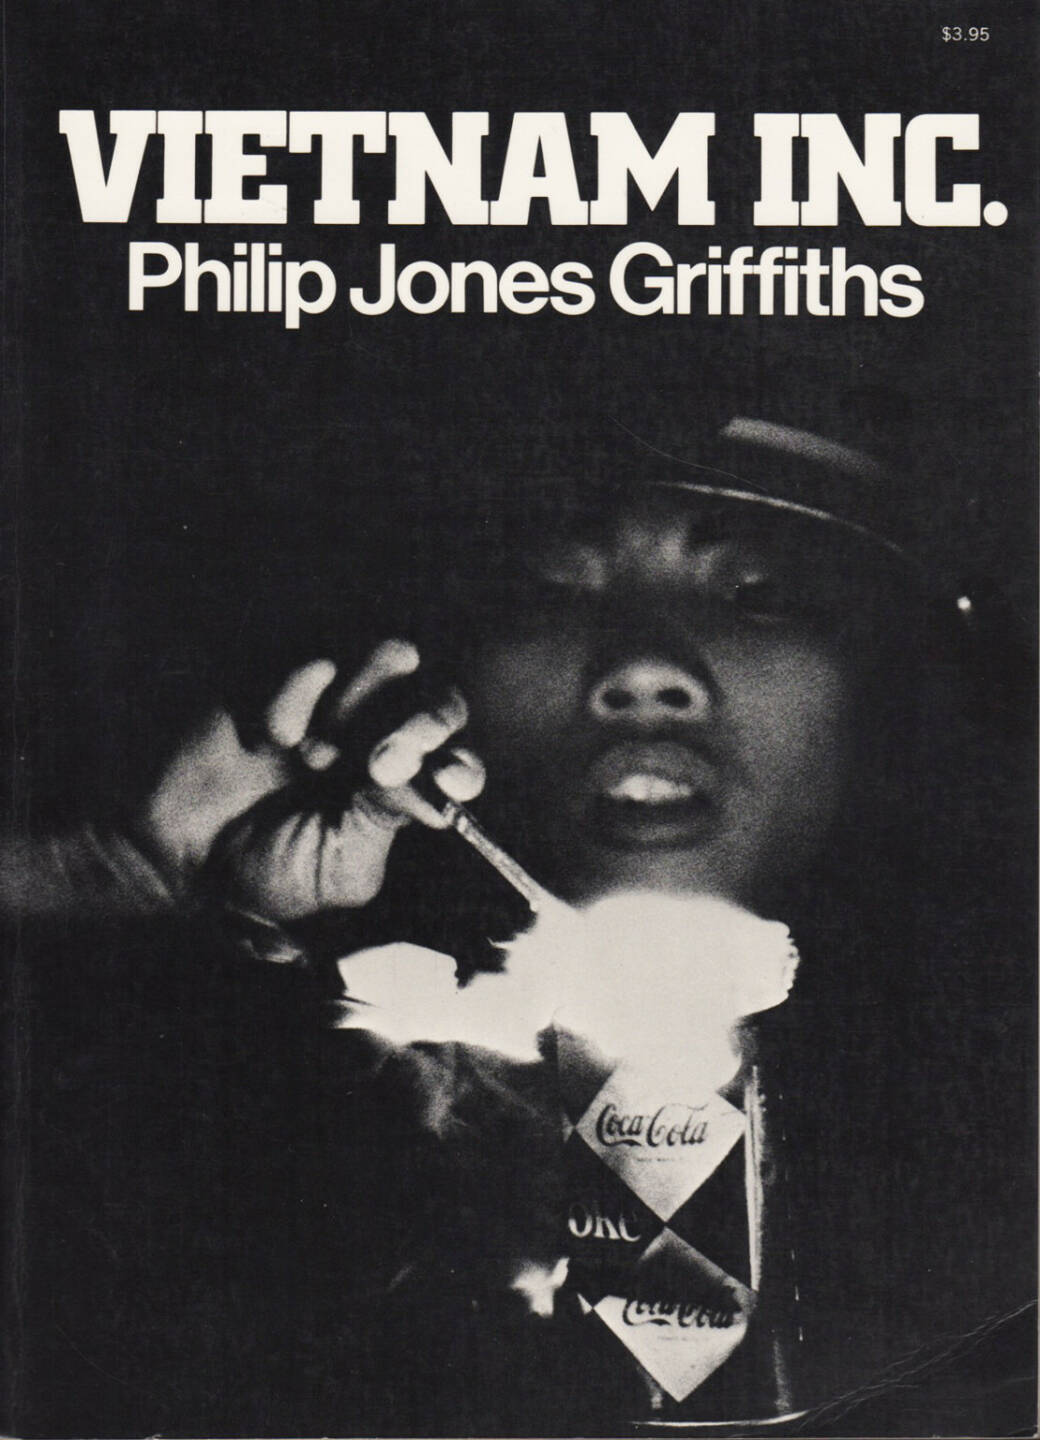 Philip Jones Griffiths - Vietnam Inc., Collier Books 1971, Cover - http://josefchladek.com/book/philip_jones_griffiths_-_vietnam_inc